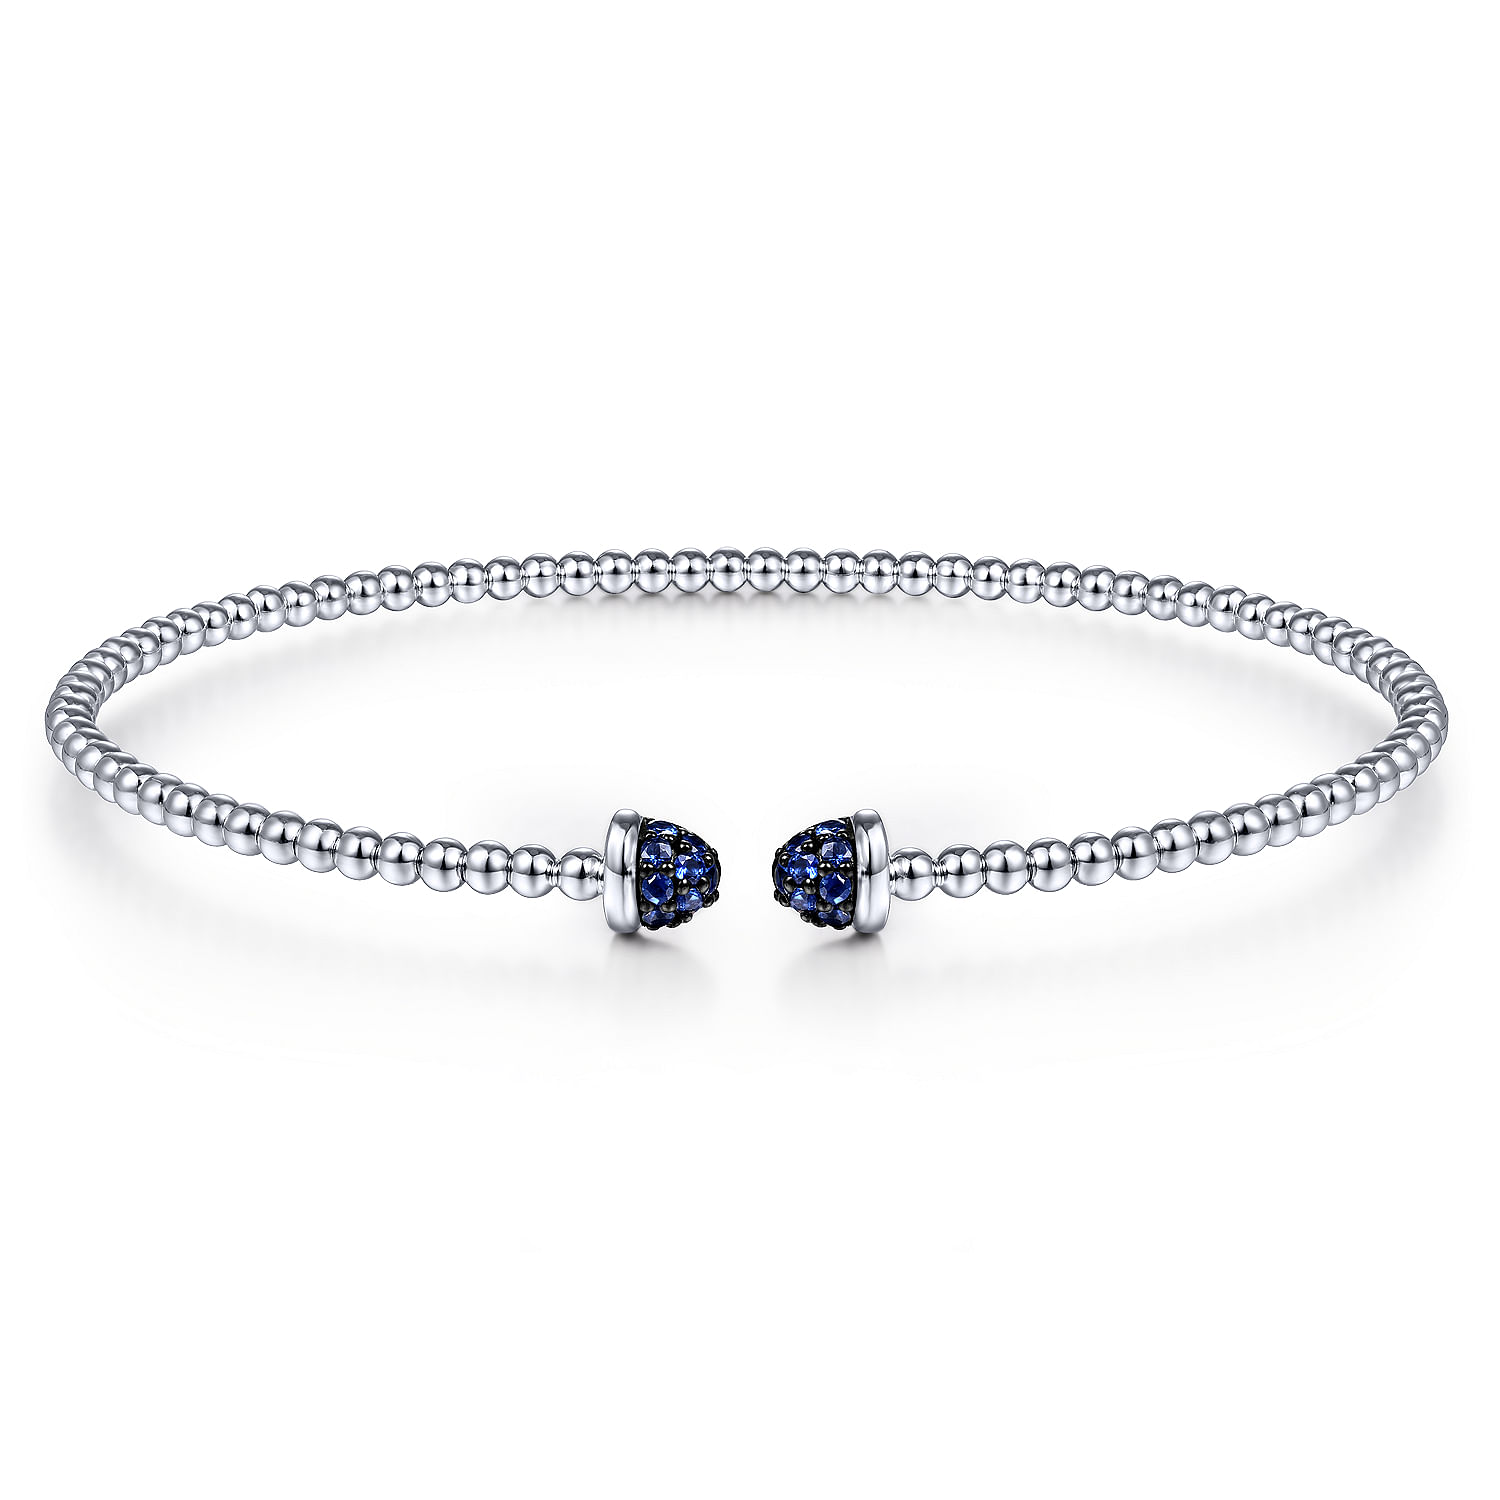 14K White Gold Bujukan Bead Cuff Bracelet with Sapphire Pav¿ª Caps